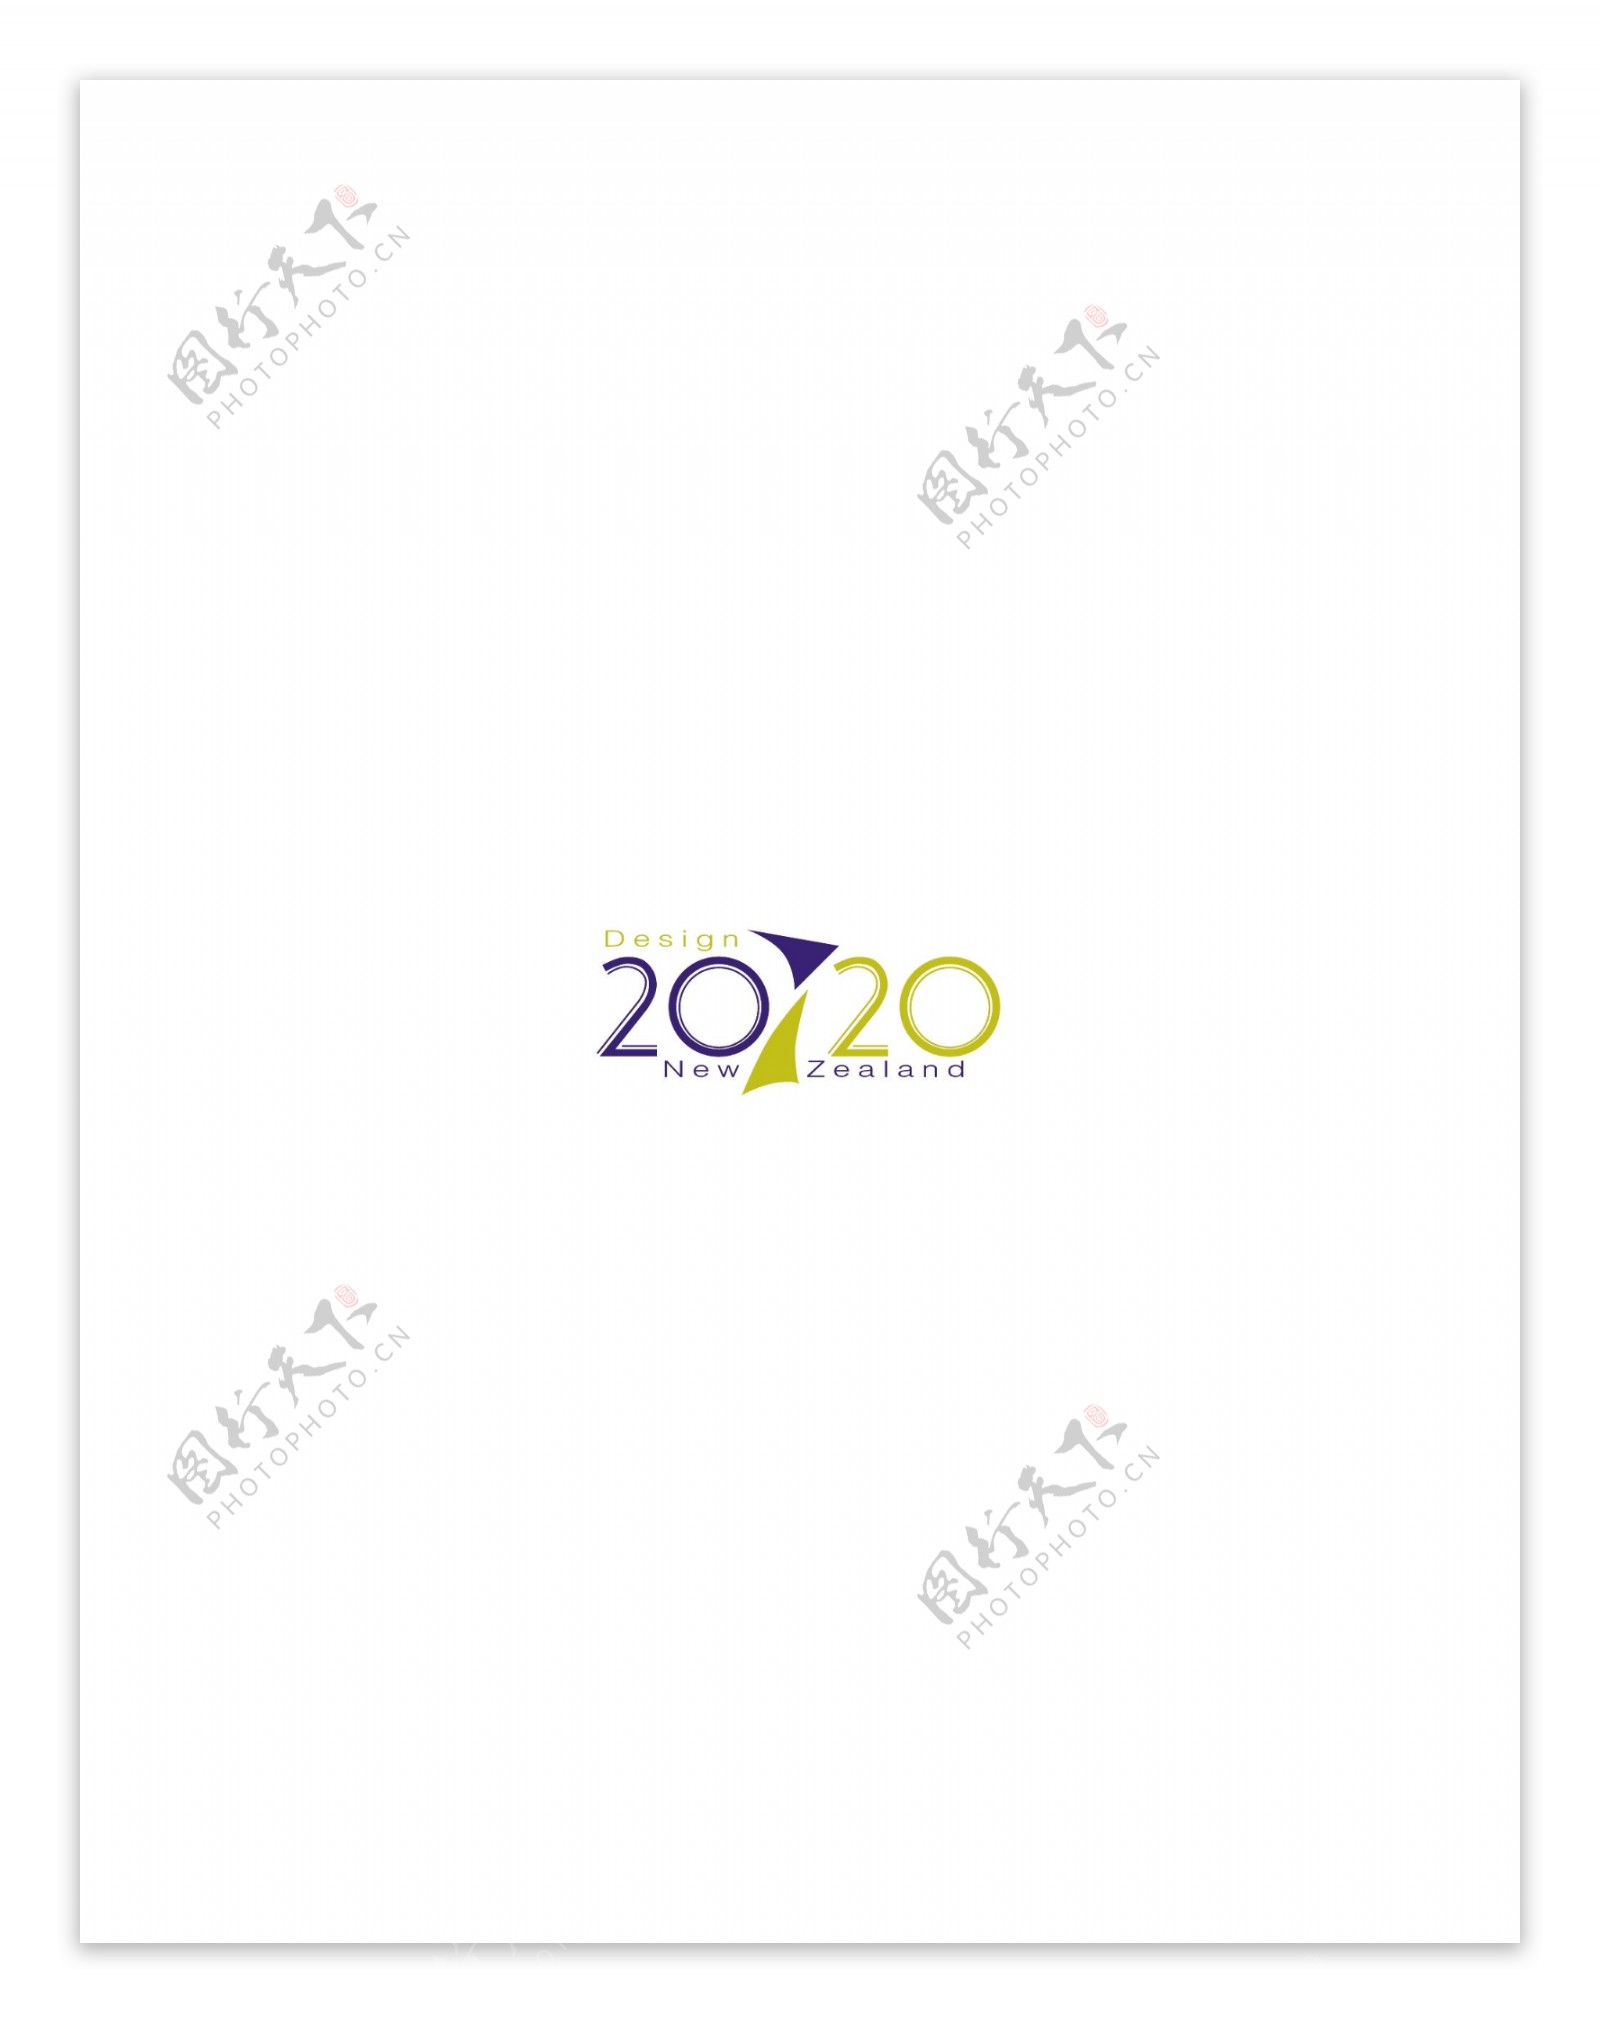 2020DesignNewZealandlogo设计欣赏2020DesignNewZealand广告公司标志下载标志设计欣赏